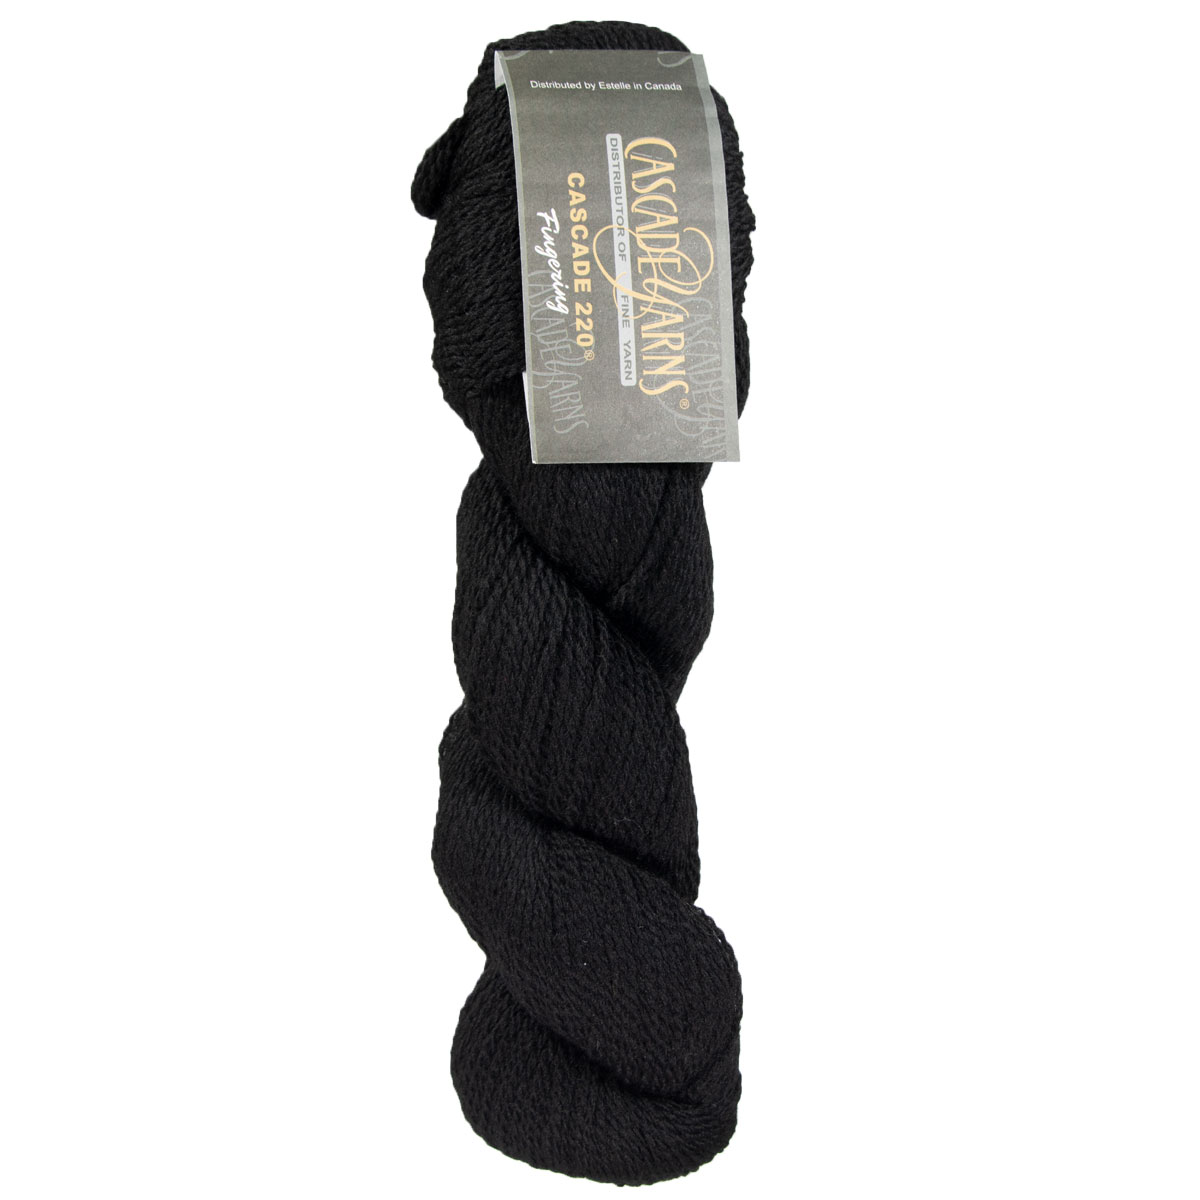 Cascade 220 8555 Black – Wool and Company